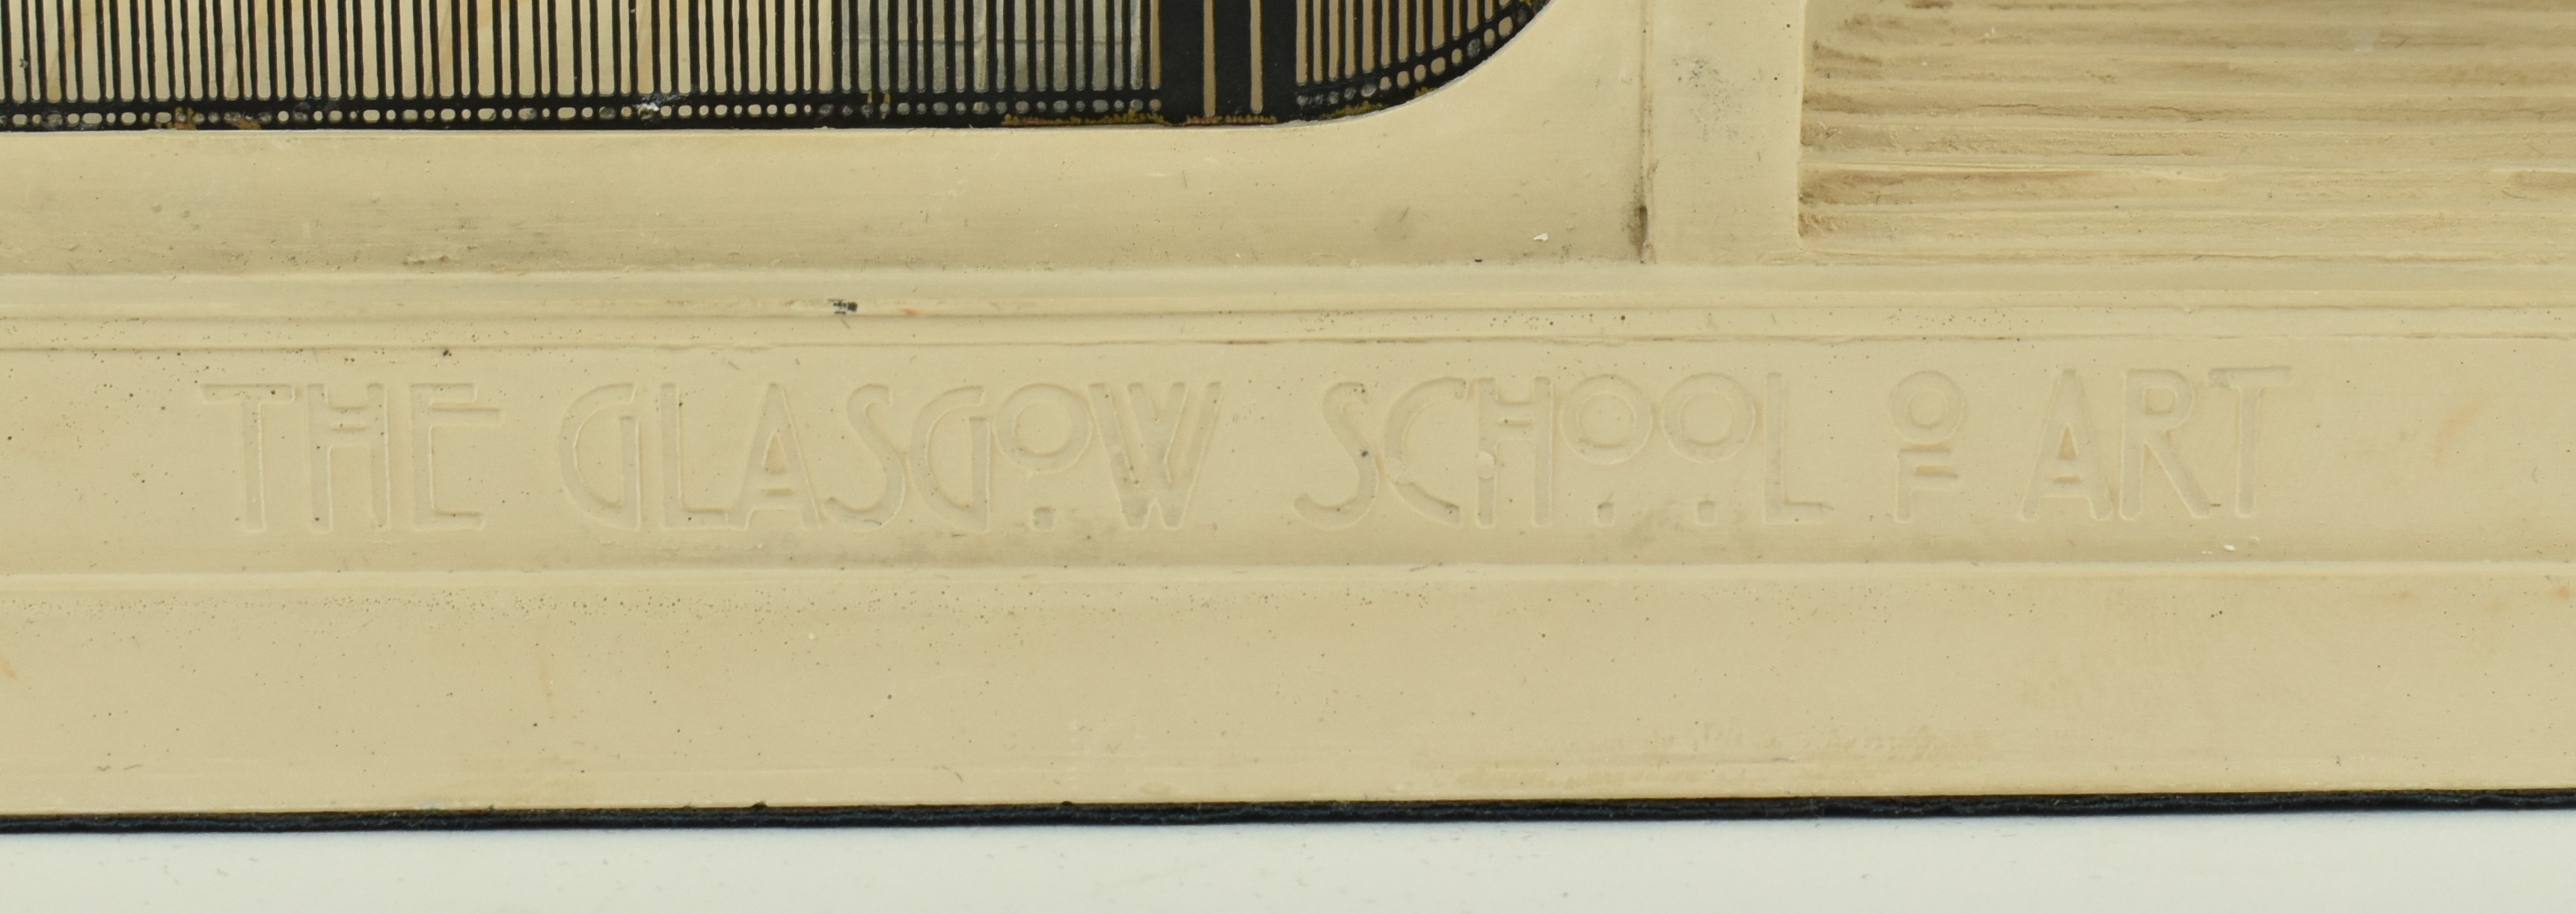 TIMOTHY RICHARDS - GLASGOW SCHOOL OF ART, RENNIE MACKINTOSH - Image 7 of 14